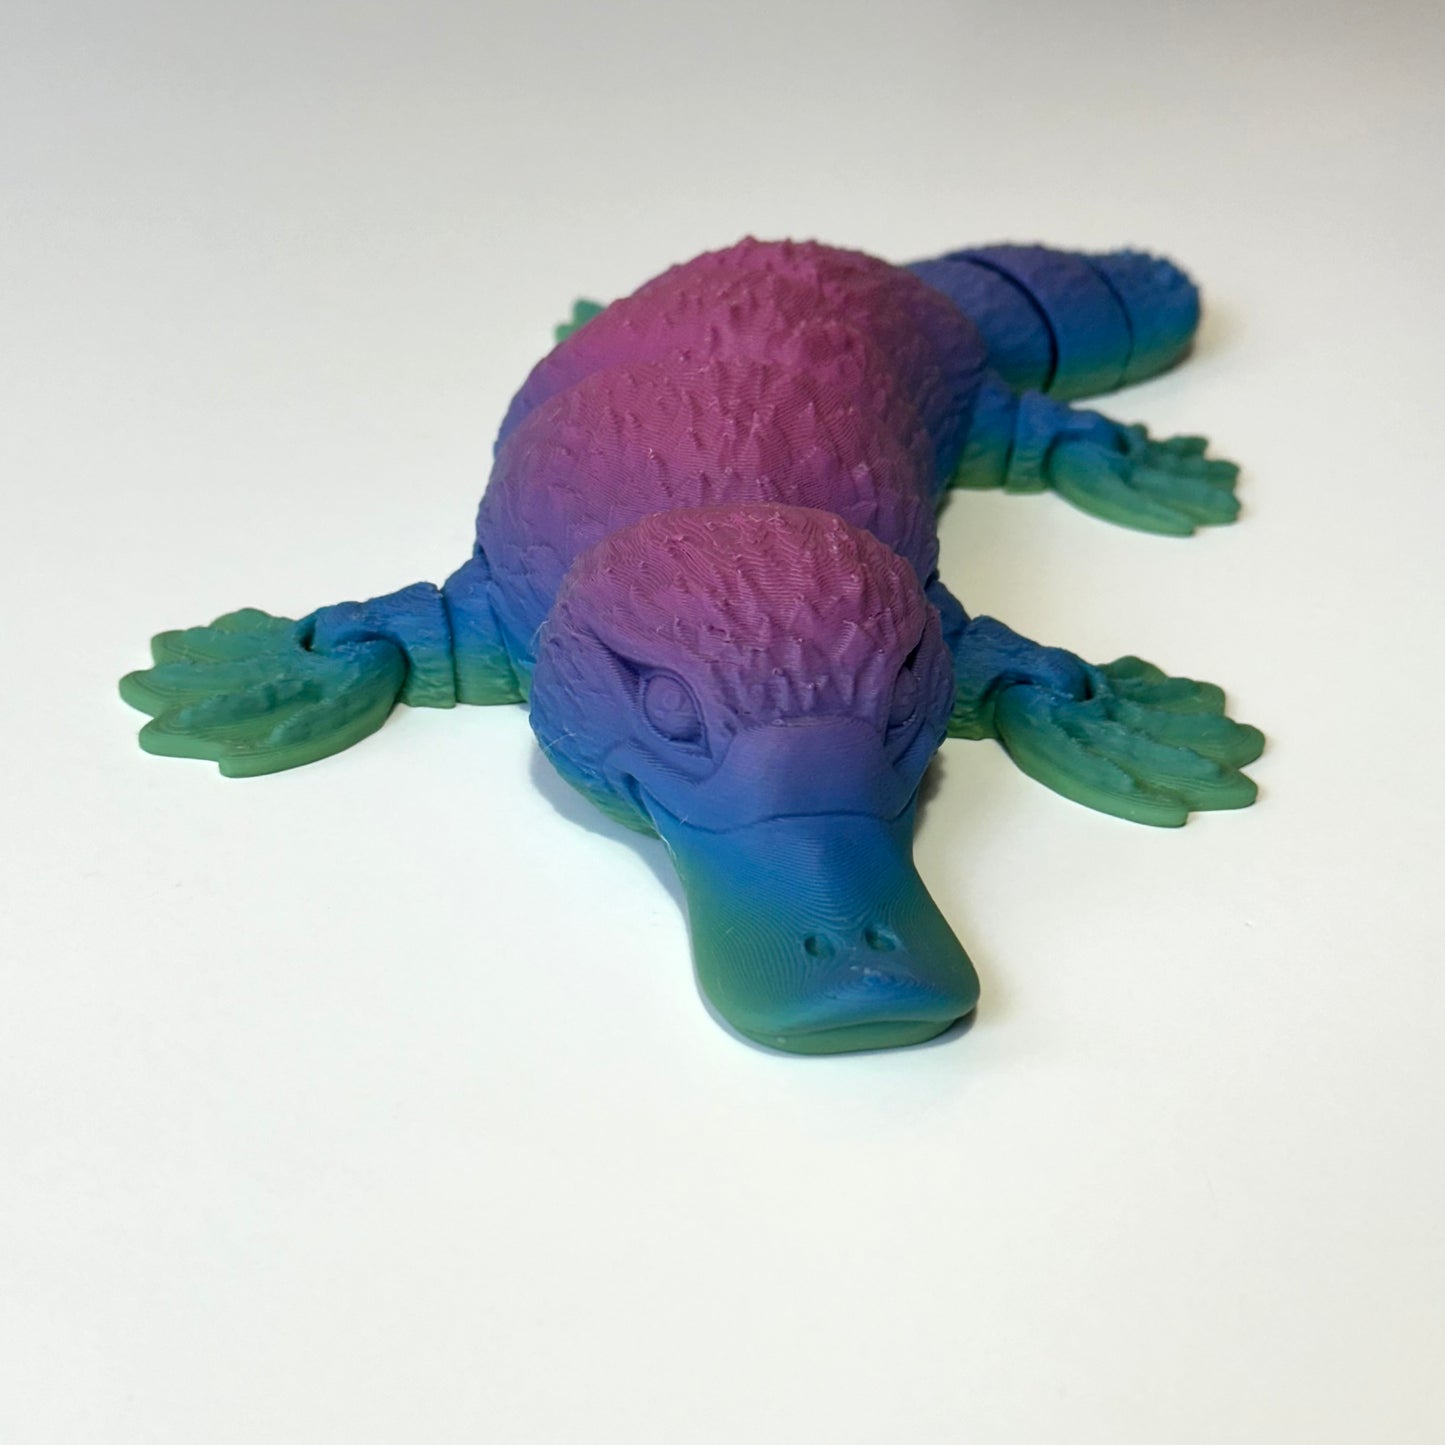 Platypus - 3D printed Articulating